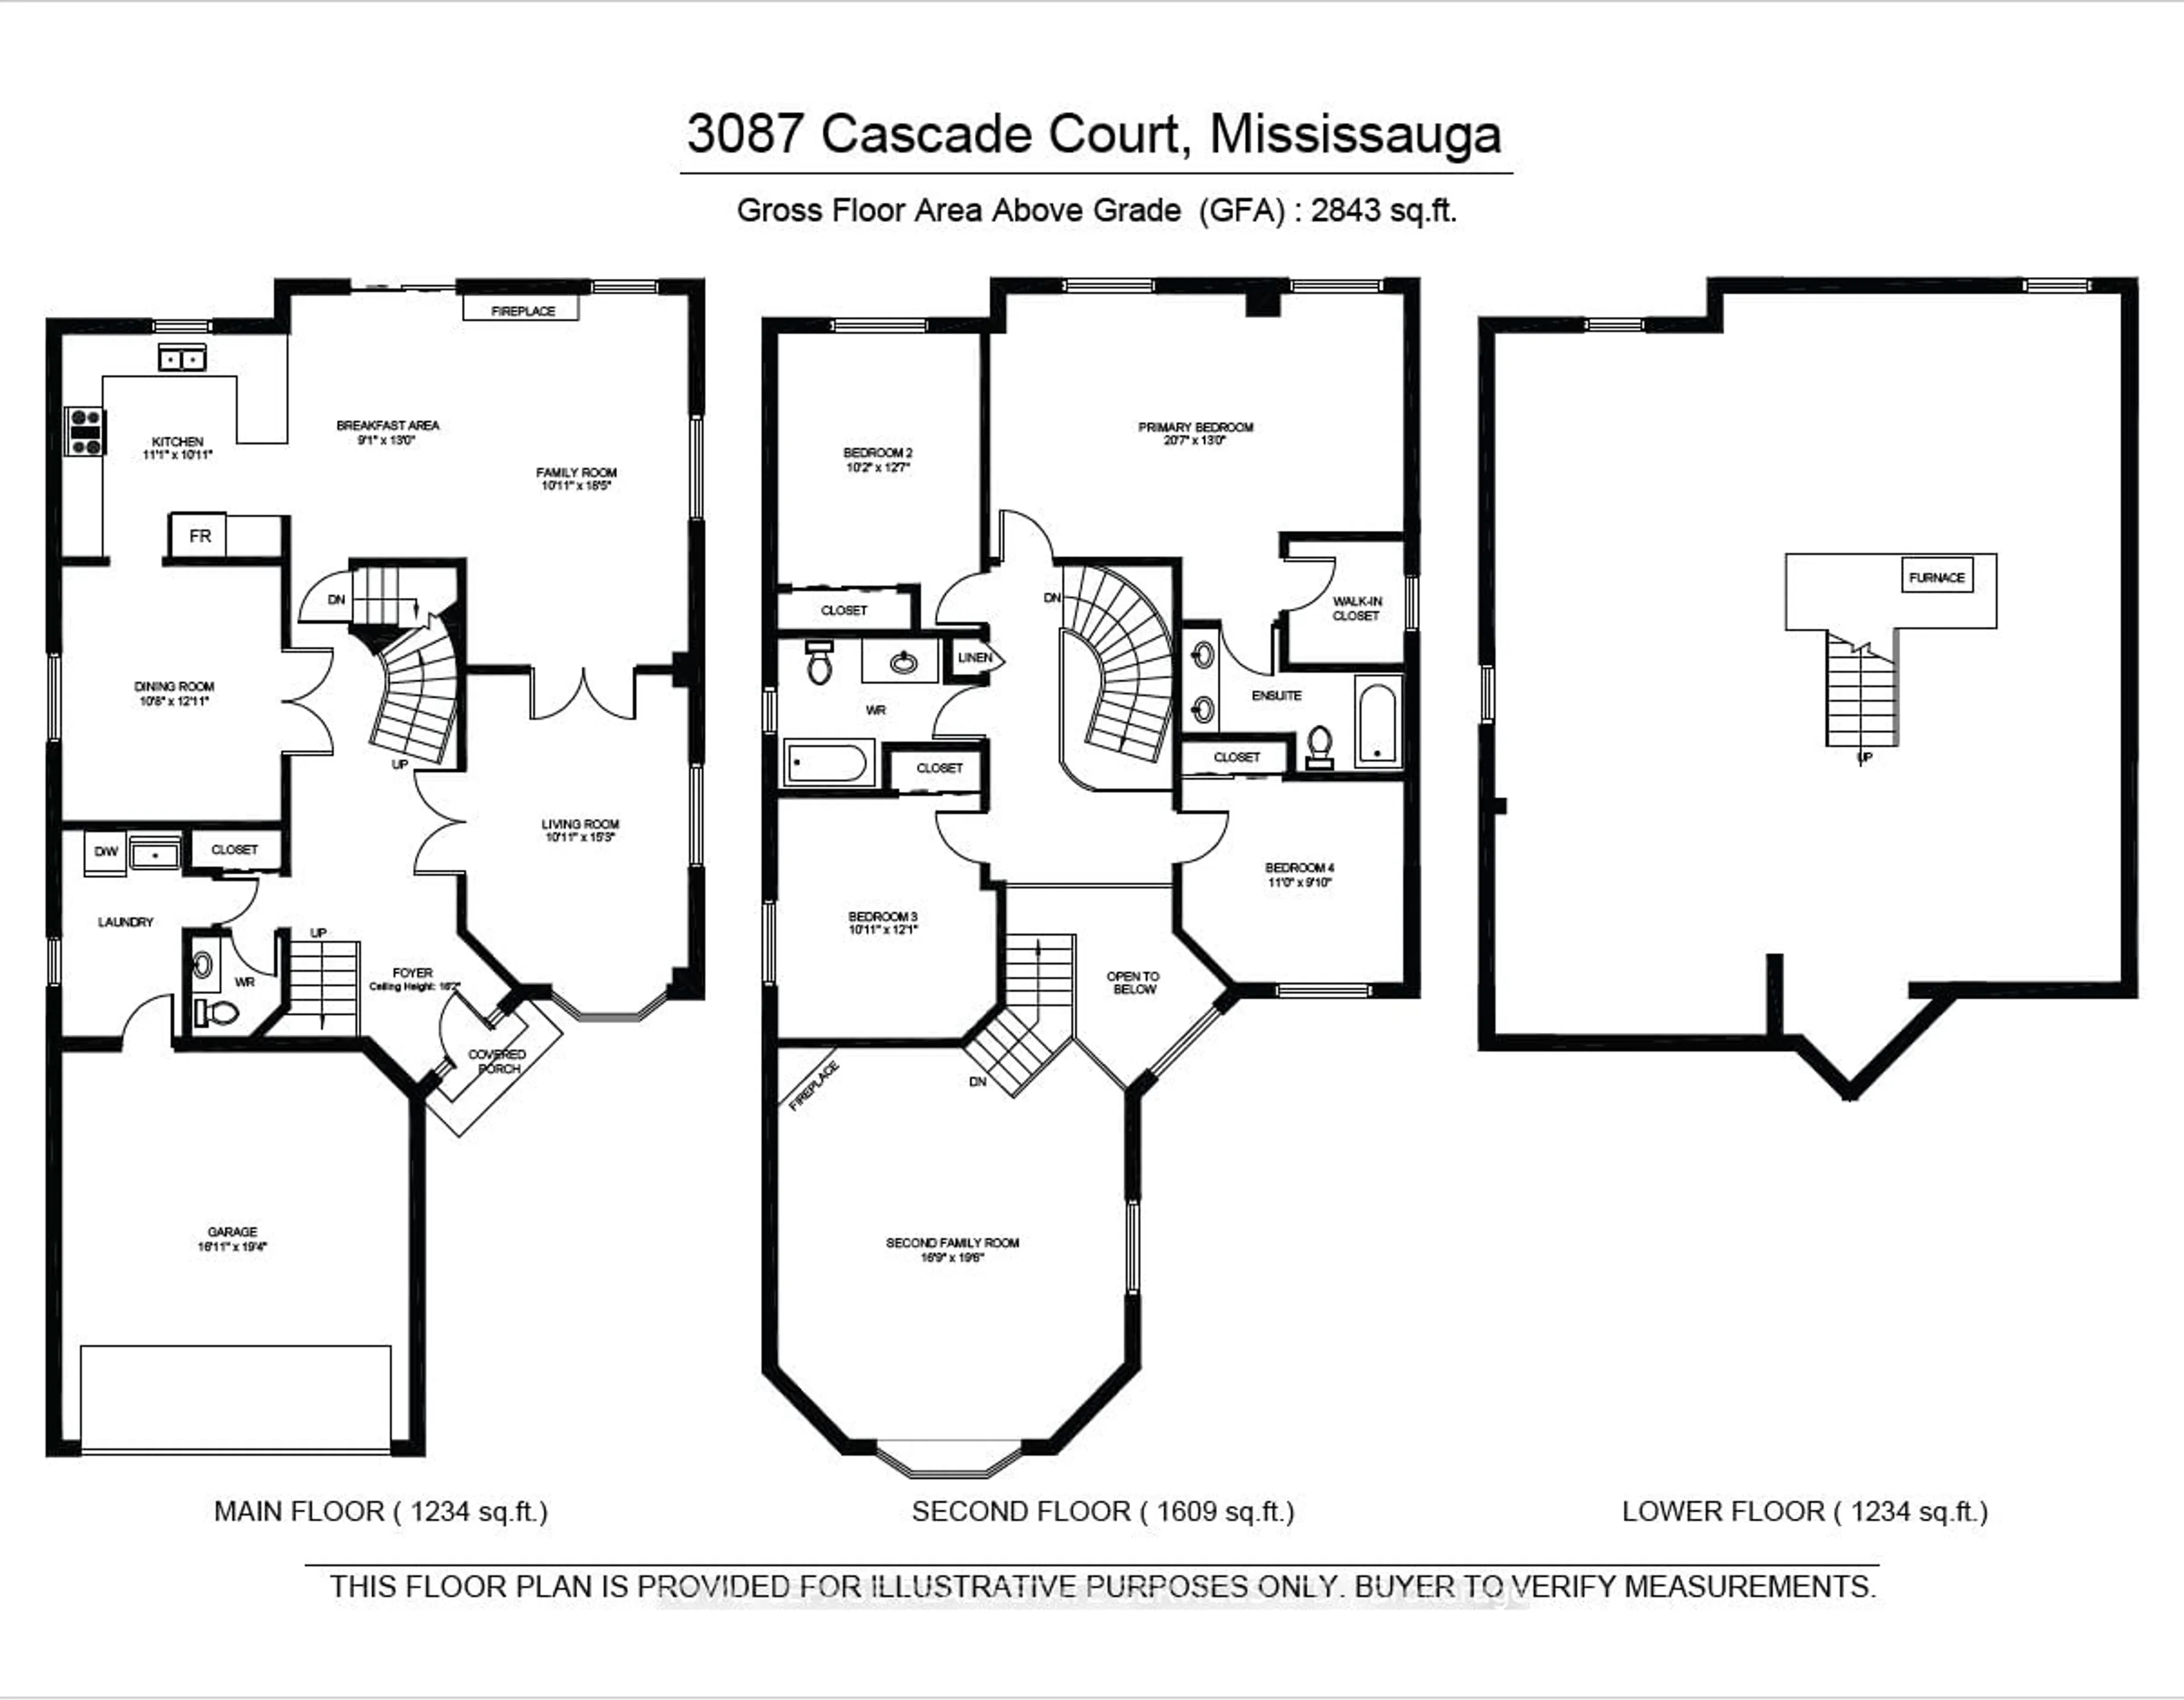 Floor plan for 3087 Cascade Crt, Mississauga Ontario L5L 5L9